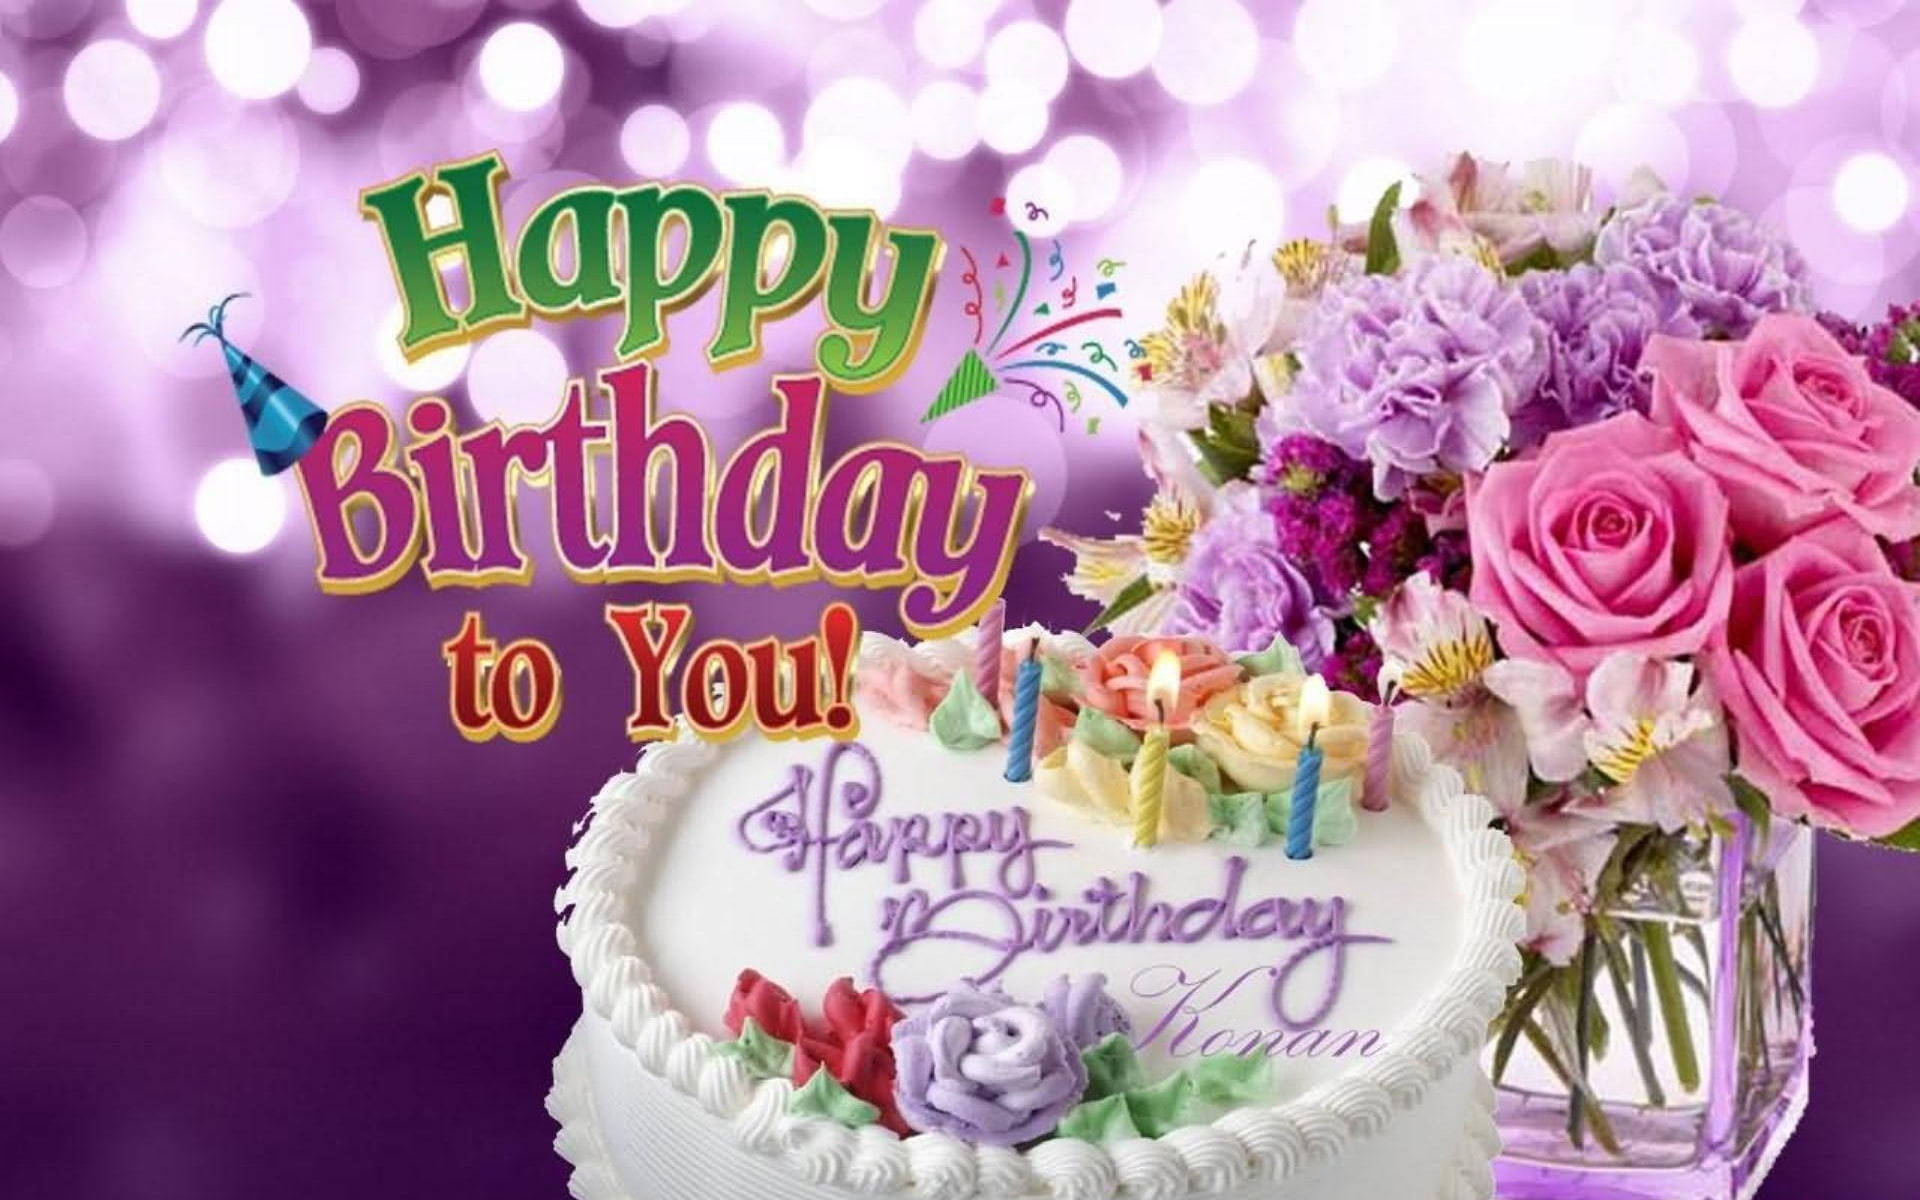 Violet-themed Happy Birthday Flower Wallpaper